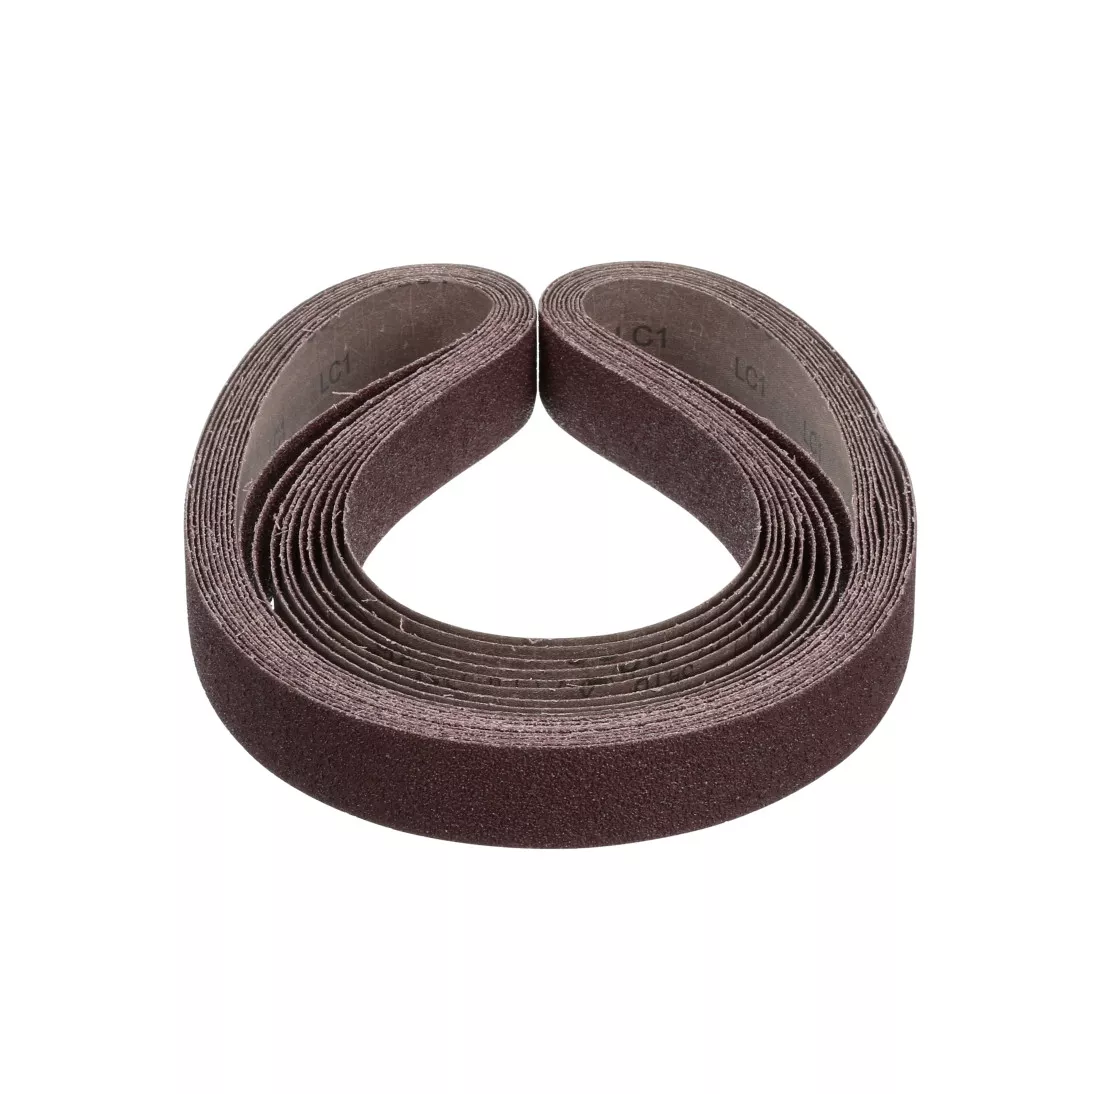 3M™ Cloth Belt 341D, P150 X-weight, 1 in x 42 in, Film-lok, Single-flex,
200 ea/Case